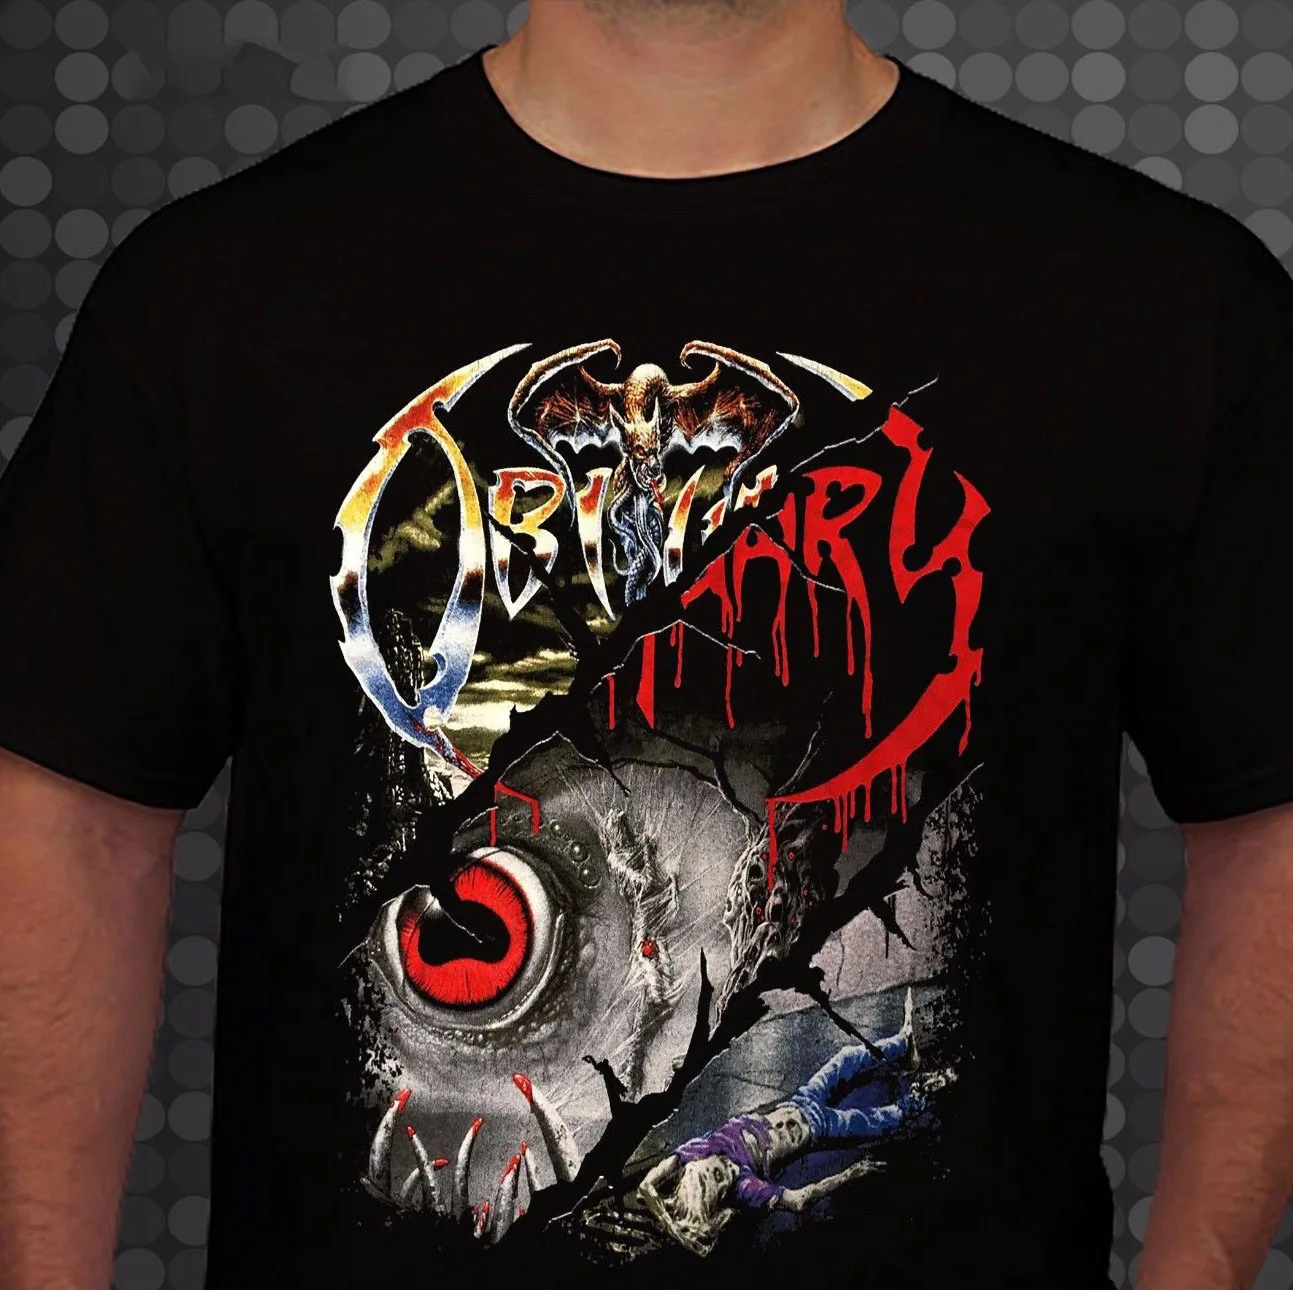 BELPHEGOR-extreme metal band-Behemoth-Dark Funeral T_shirt-sizes:S to 7XL